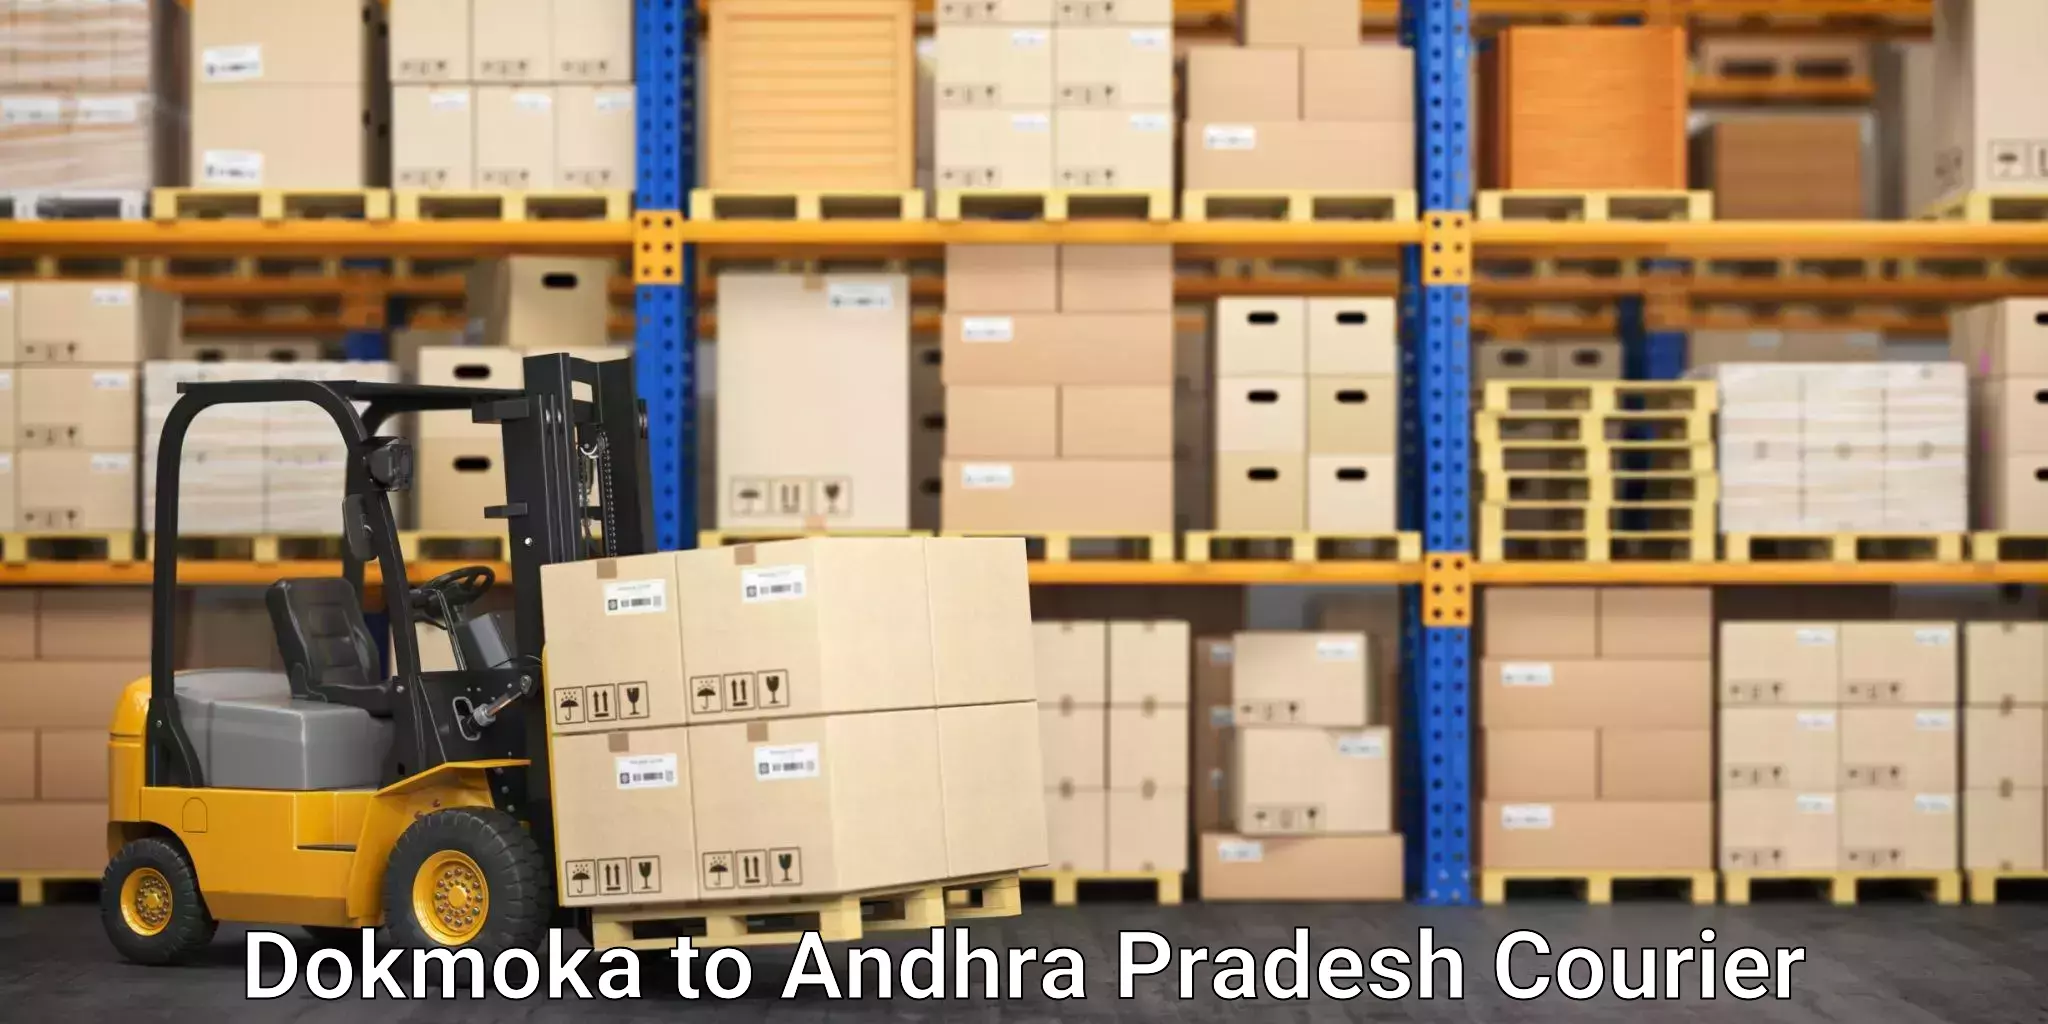 Professional courier handling Dokmoka to Andhra Pradesh